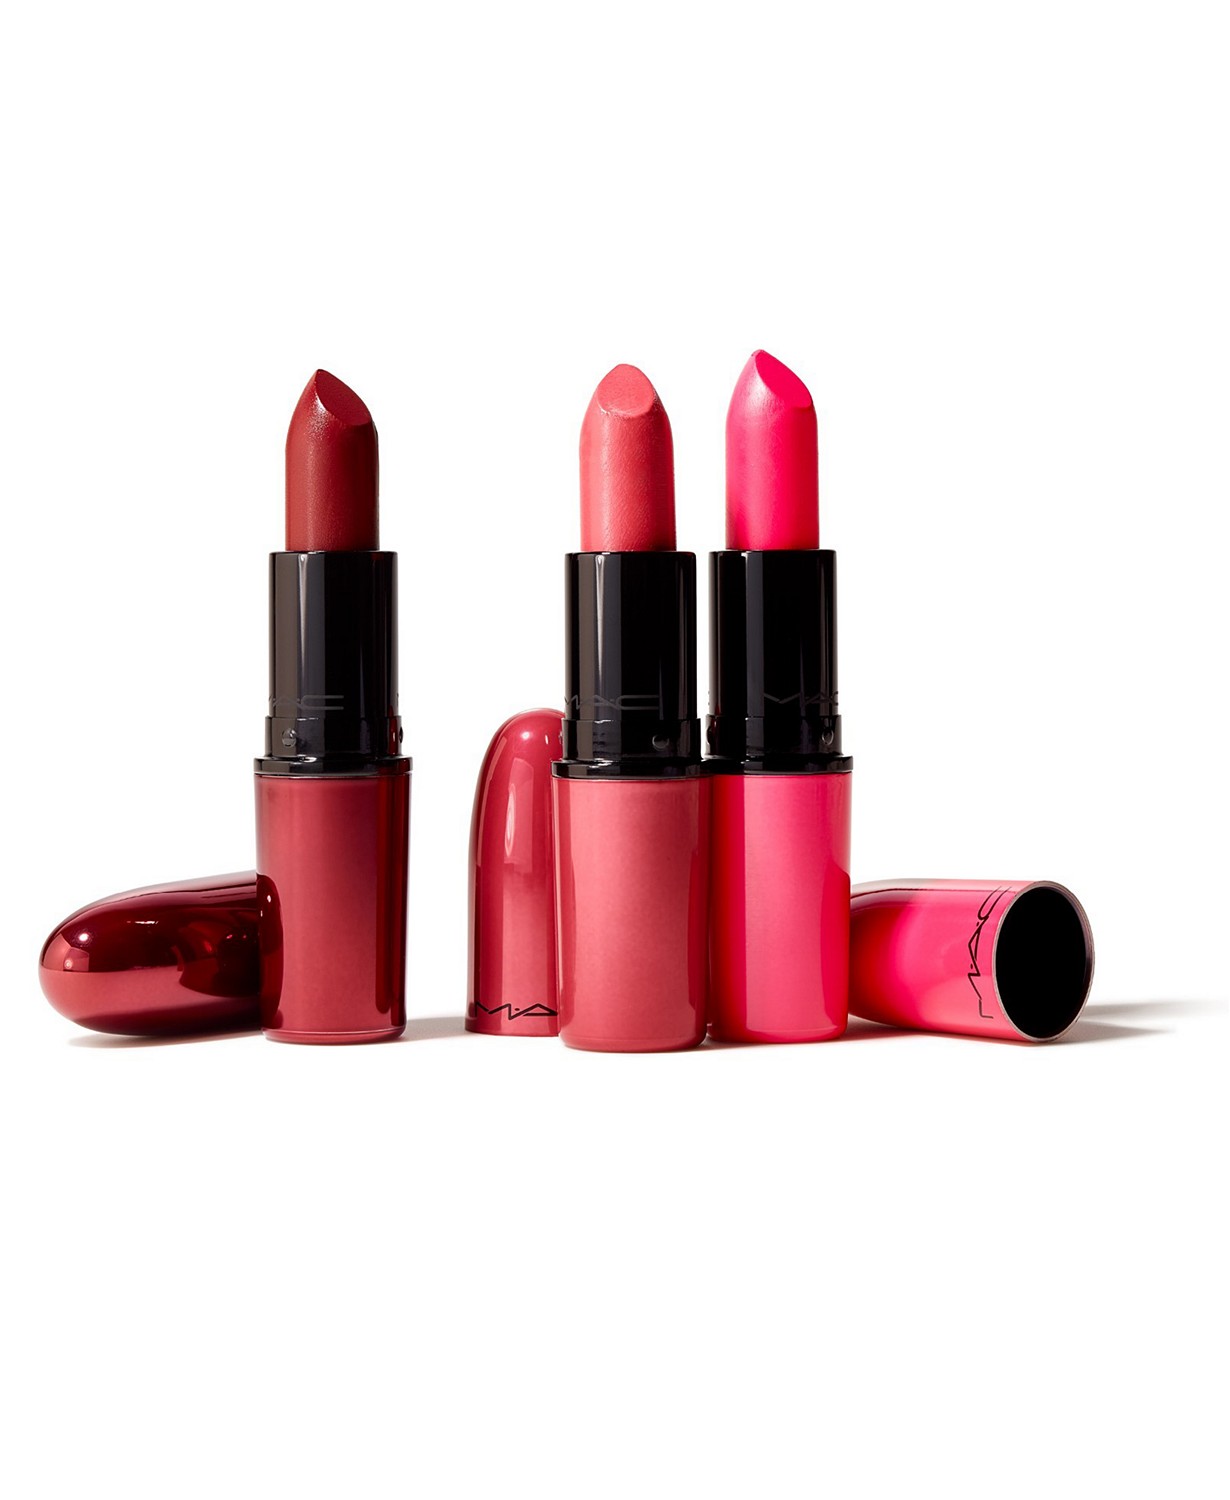 relentlessly red lipstick